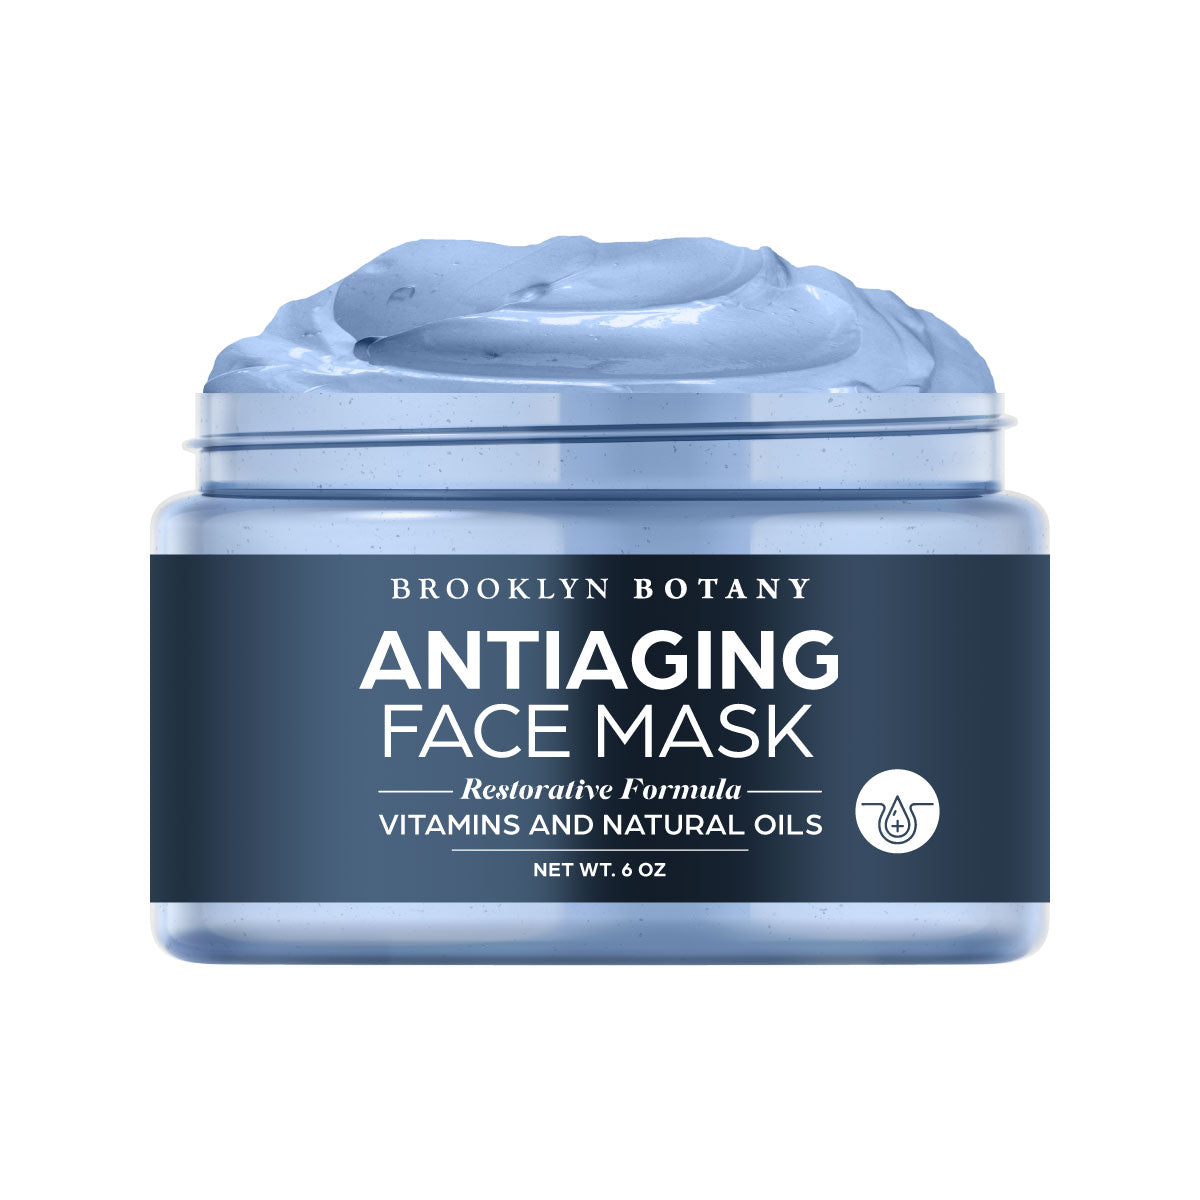 BB-Antiaging-mask-image-front.jpg